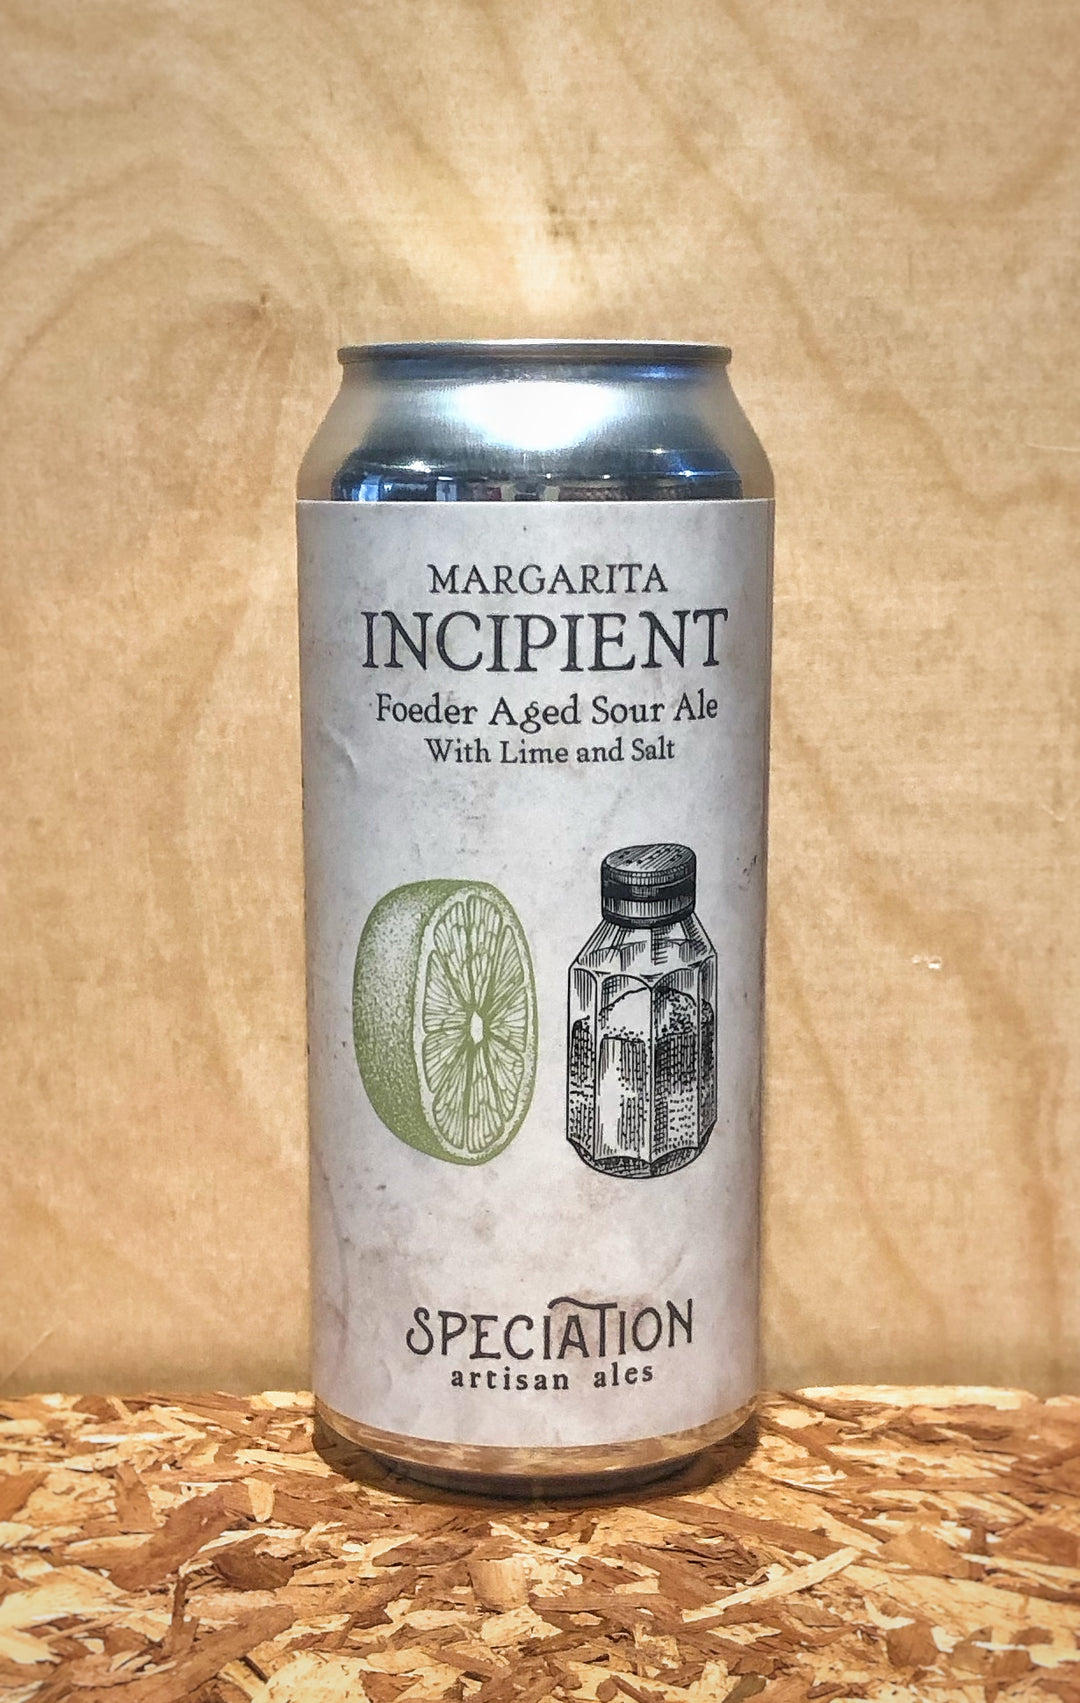 Speciation Artisan Ales 'Margarita Incipient' Foeder Aged Sour Ale with Lime and Salt (Grand Rapids, MI)